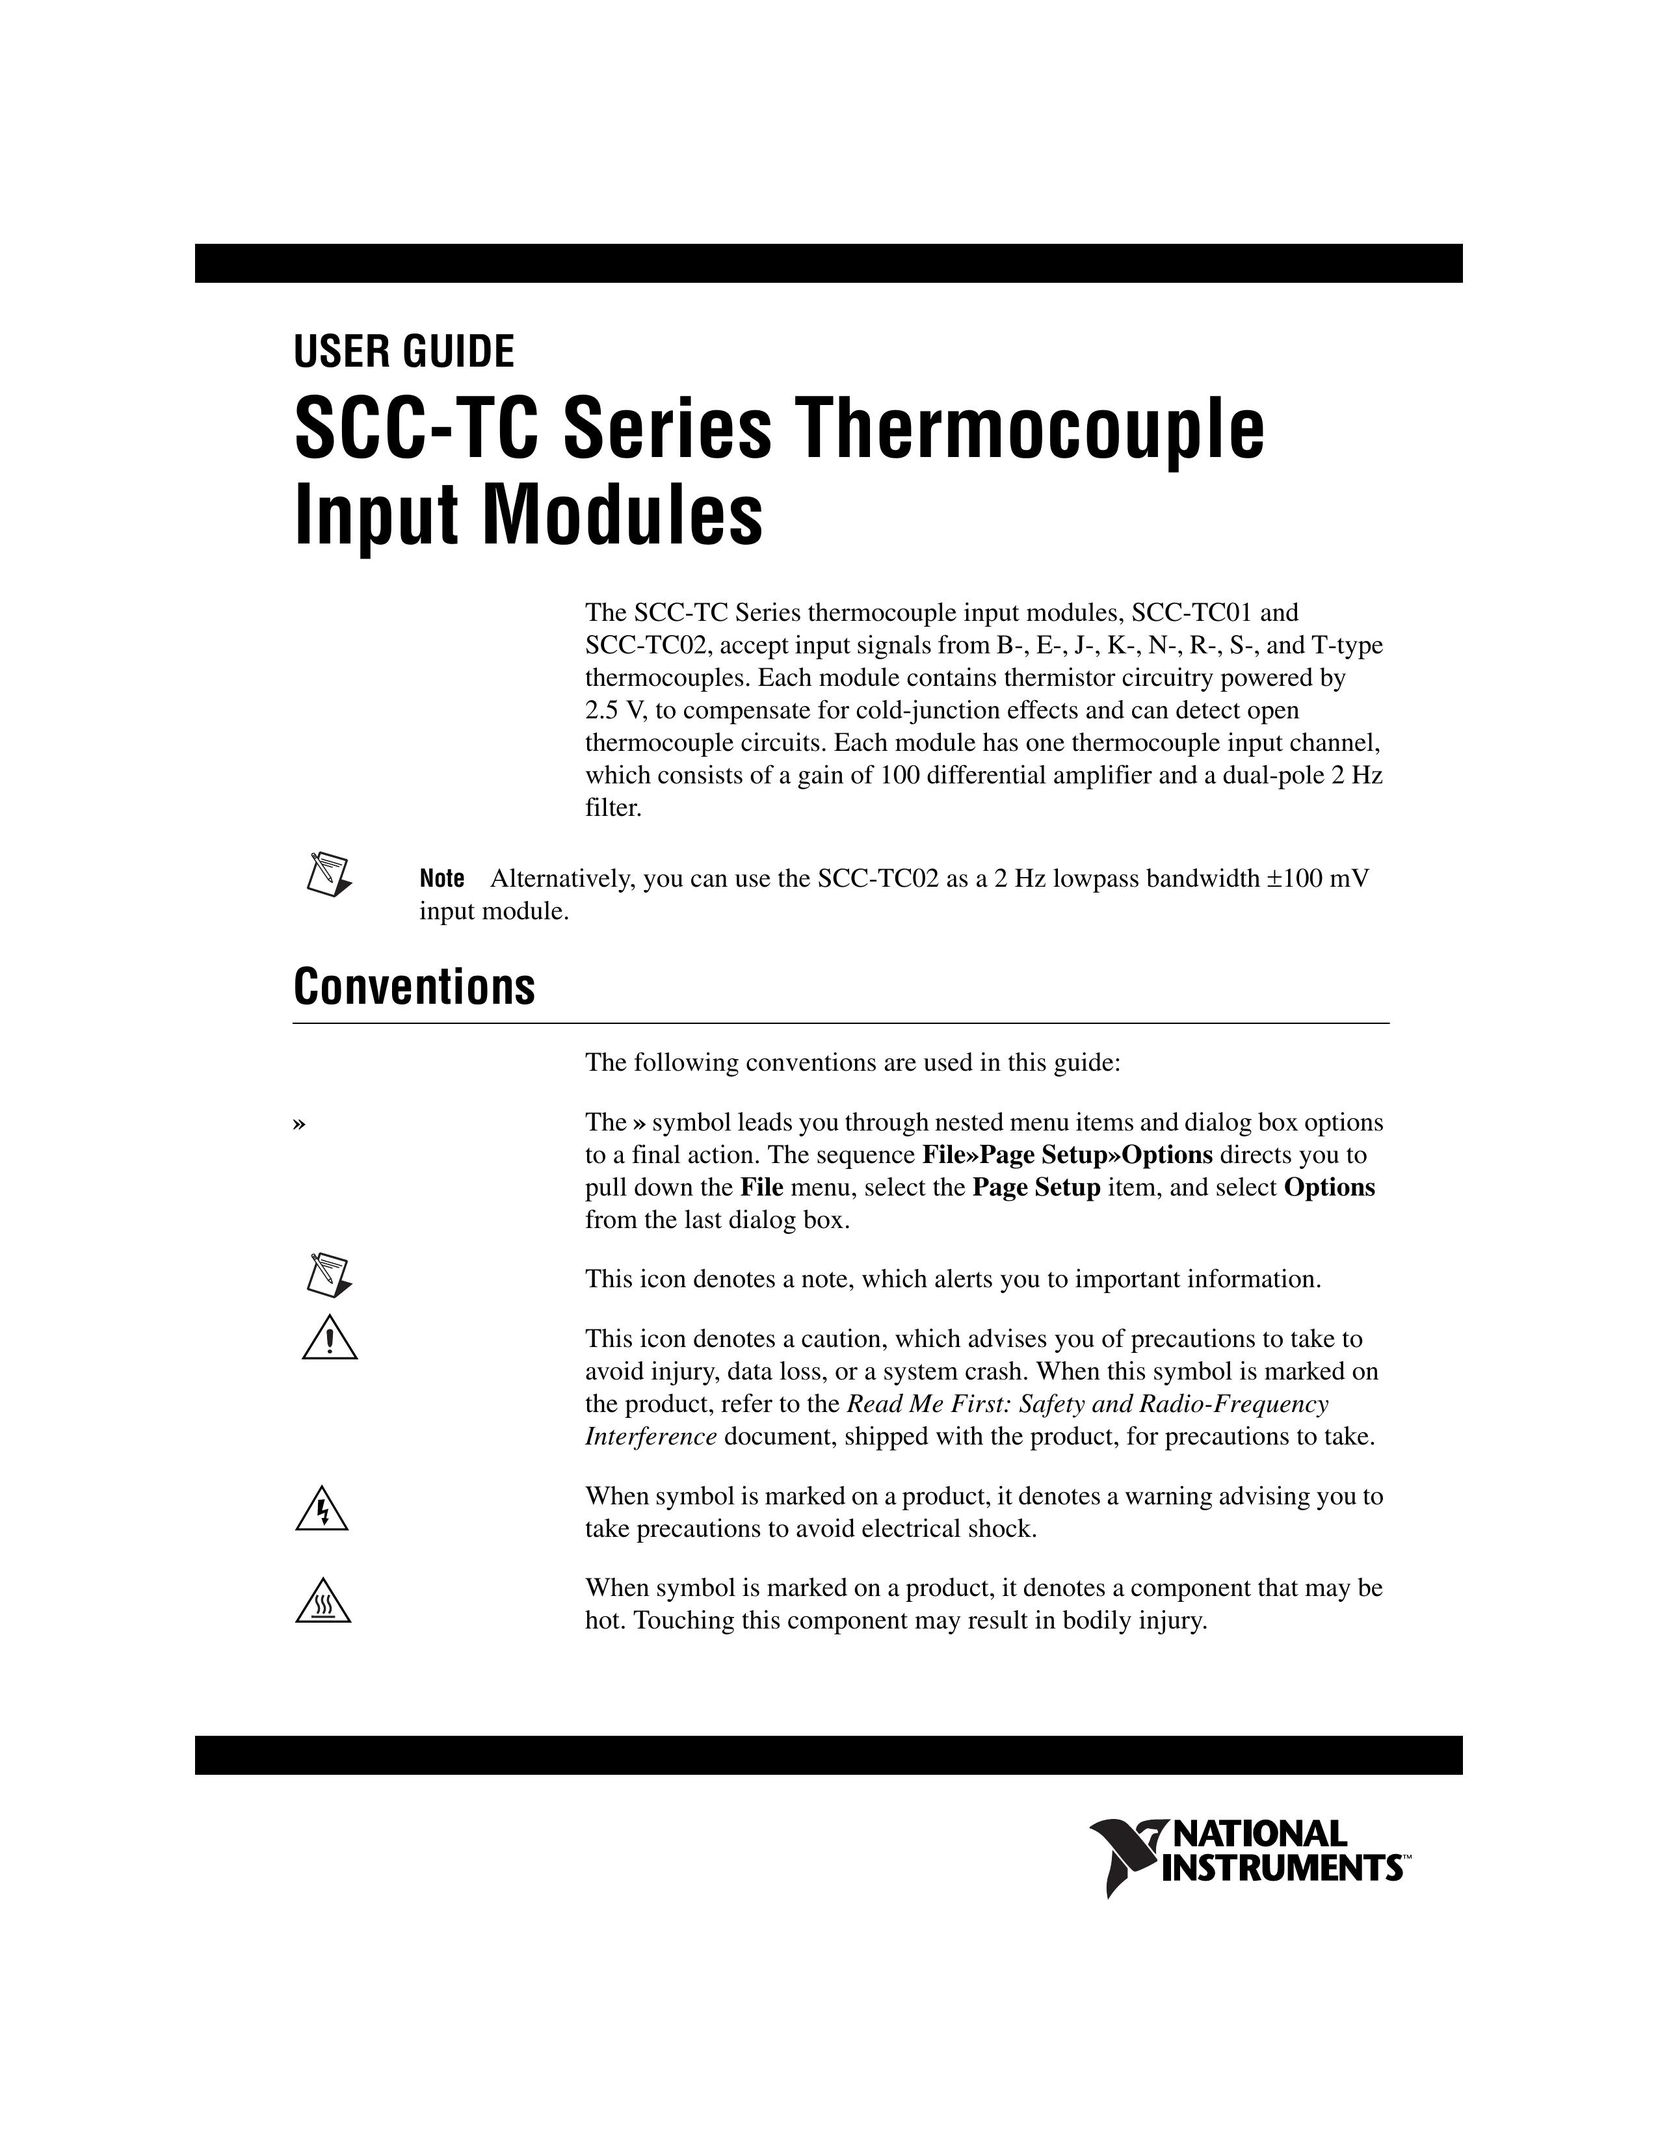 National Instruments SCC-TC01 Model Vehicle User Manual